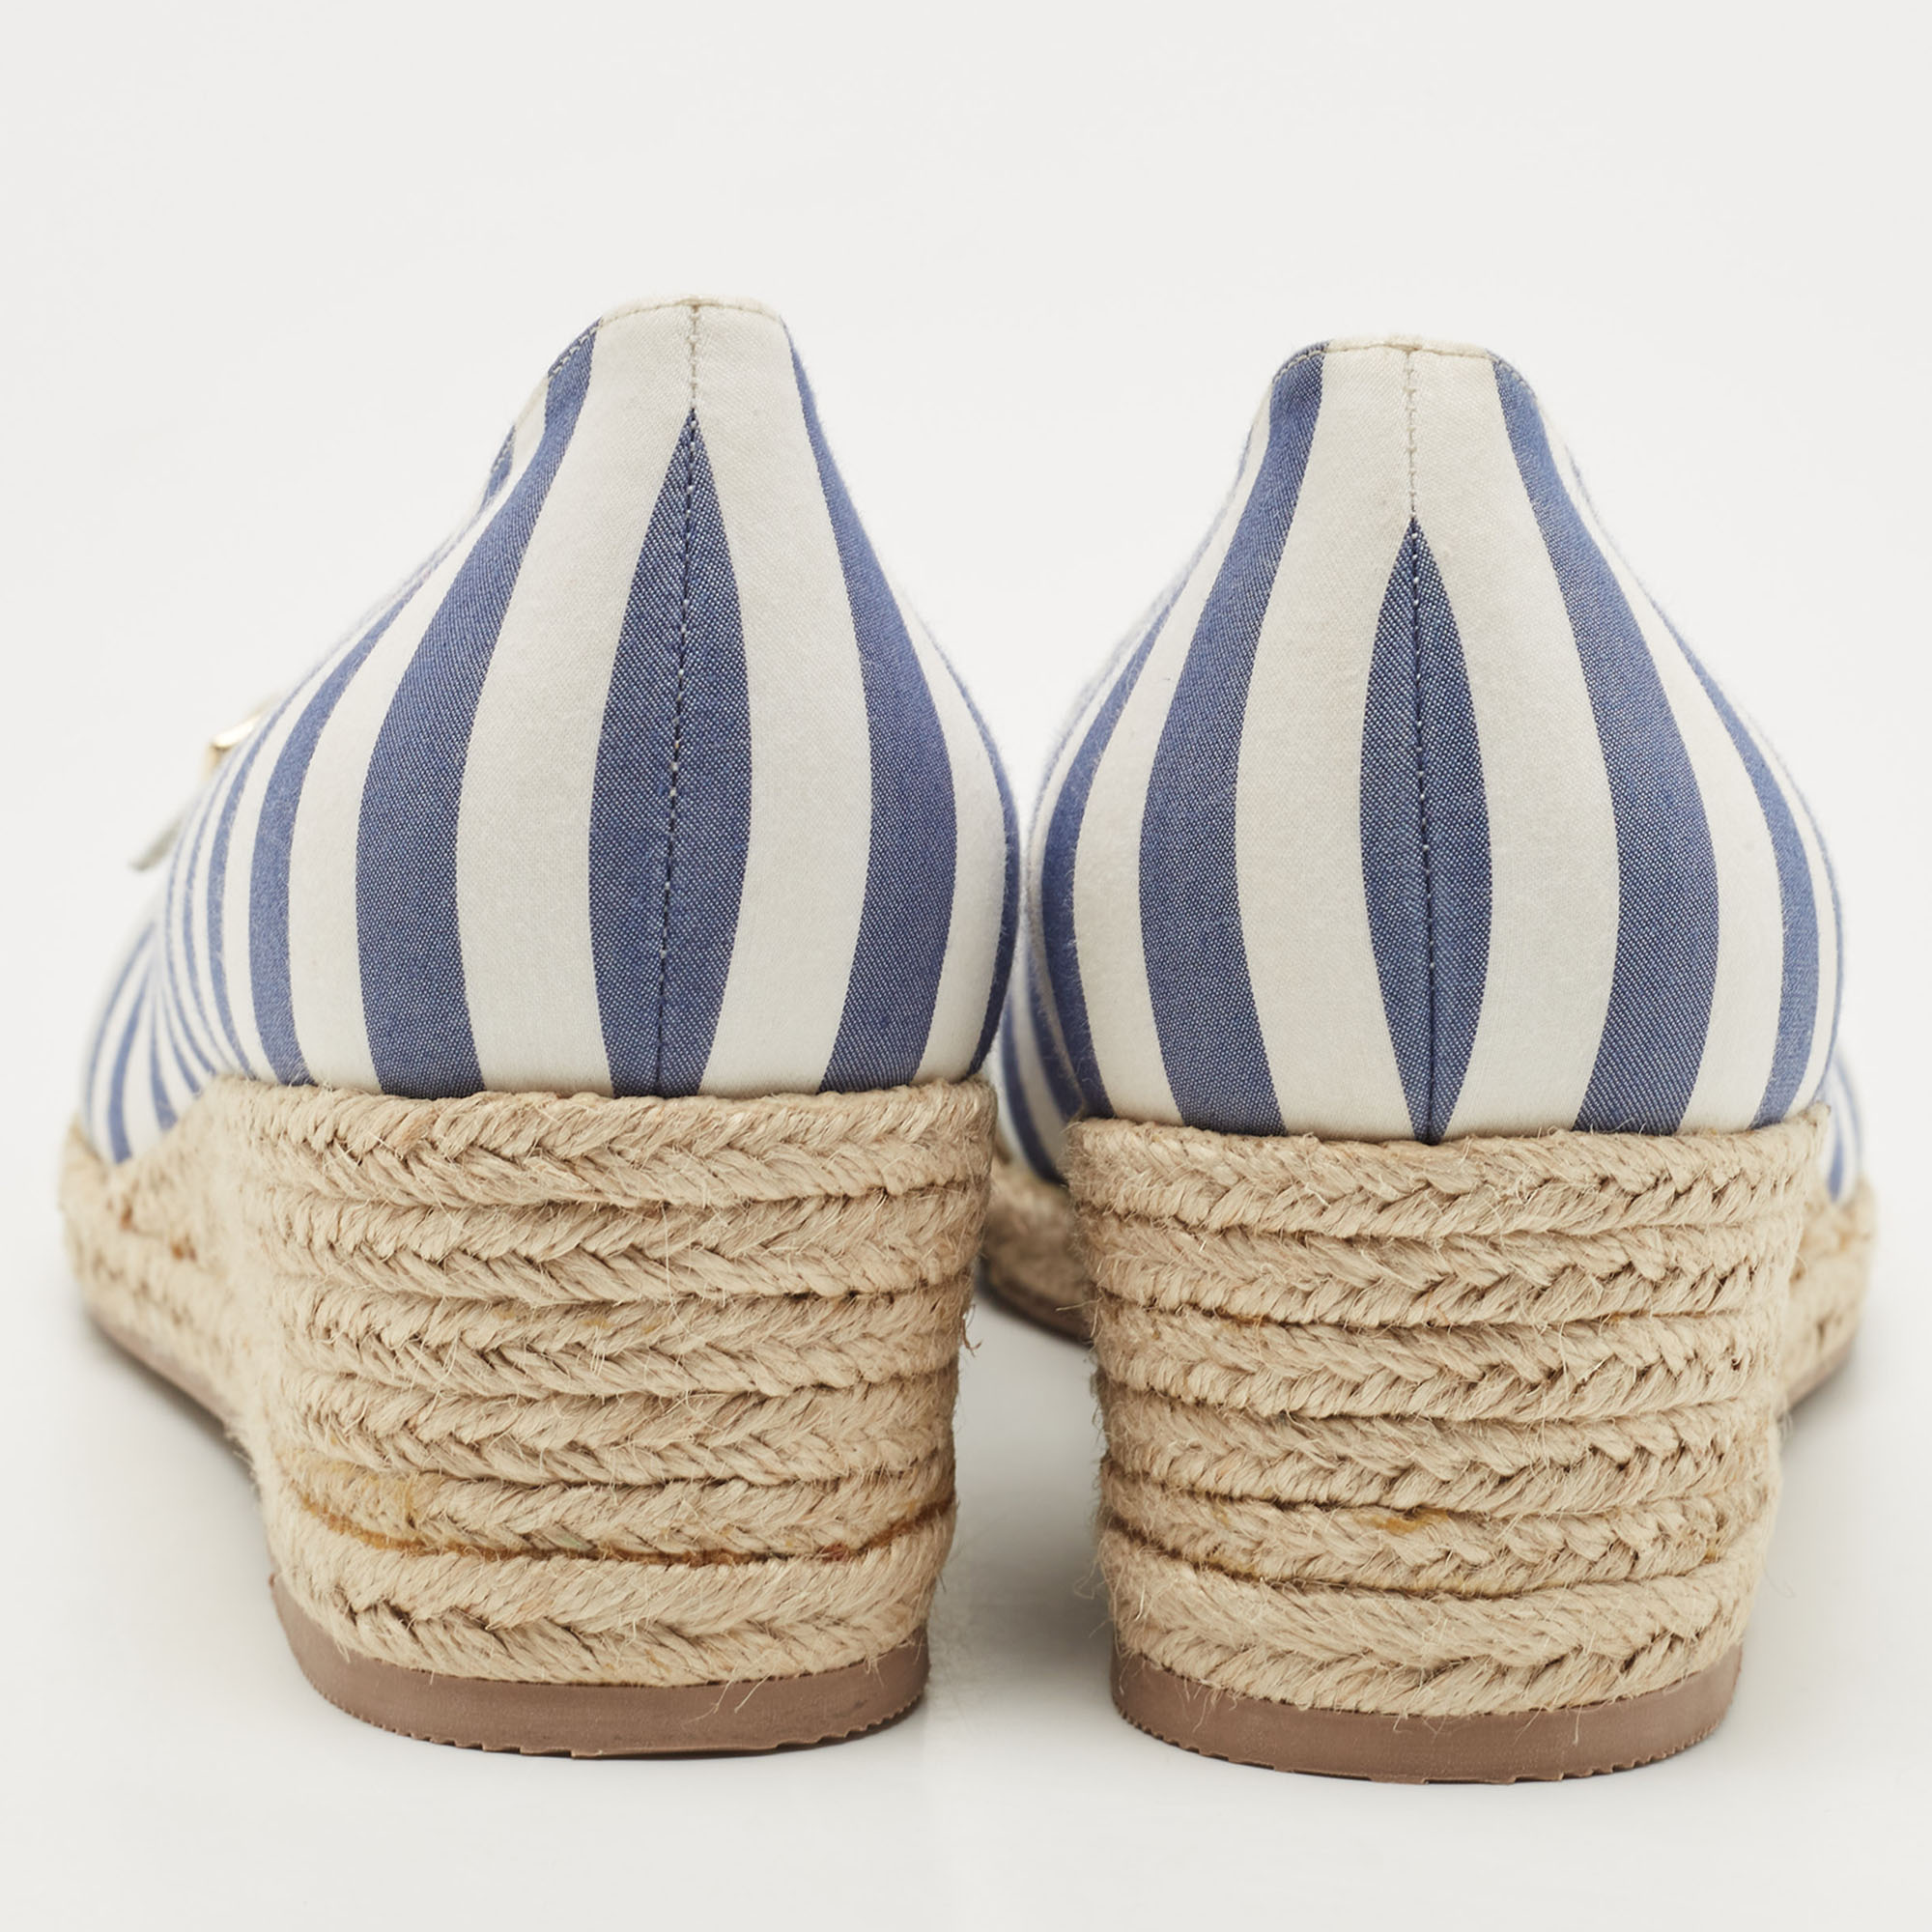 Salvatore Ferragamo Blue/White Striped Fabric Audrey Wedge Espadrille Pumps Size 40.5